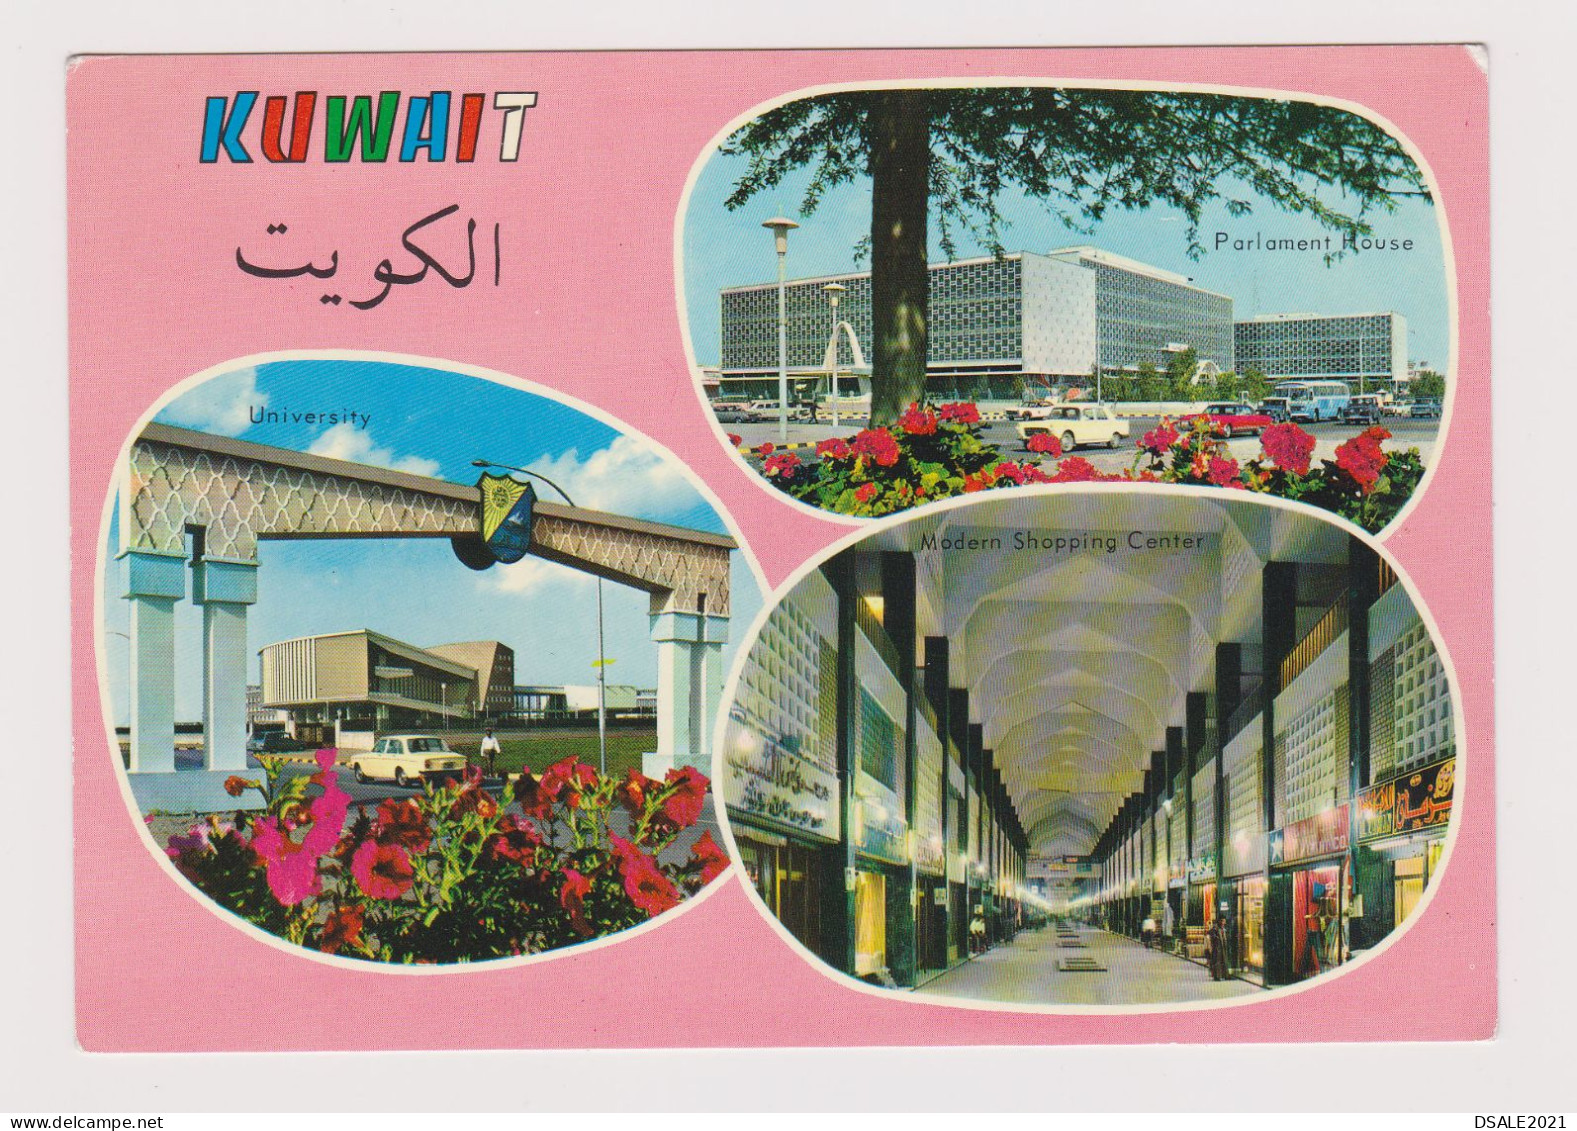 KUWAIT University, Old Car, Parliament House, Shopping Center, View Vintage Photo Postcard RPPc AK (1311) - Kuwait